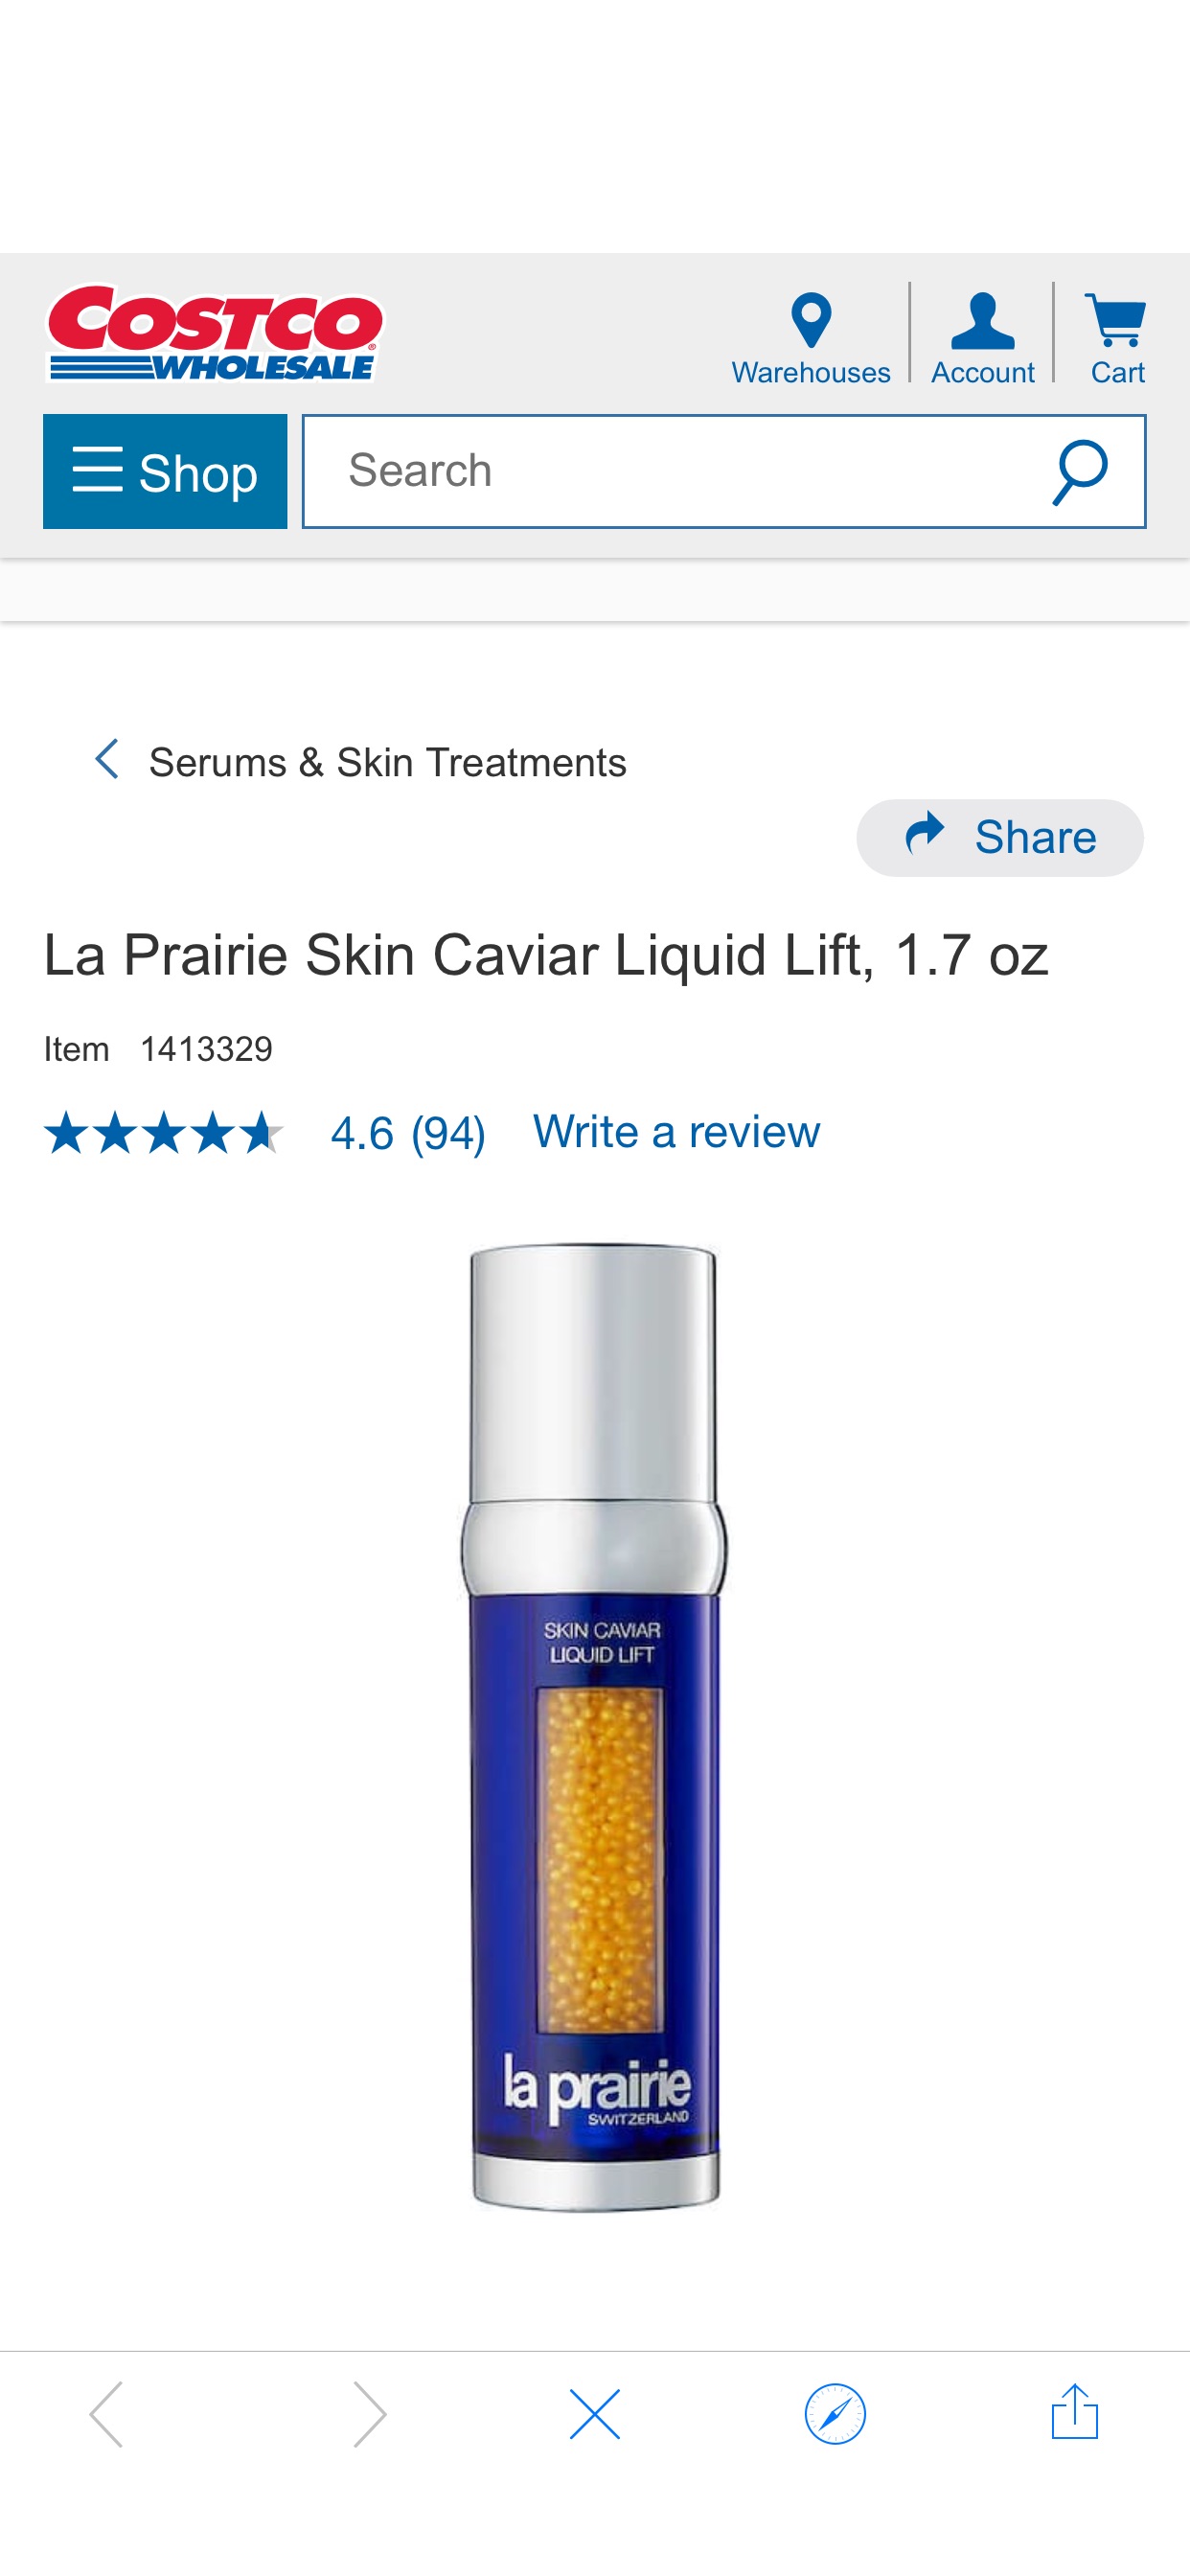 La Prairie Skin Caviar Liquid Lift, 1.7 oz | Costco